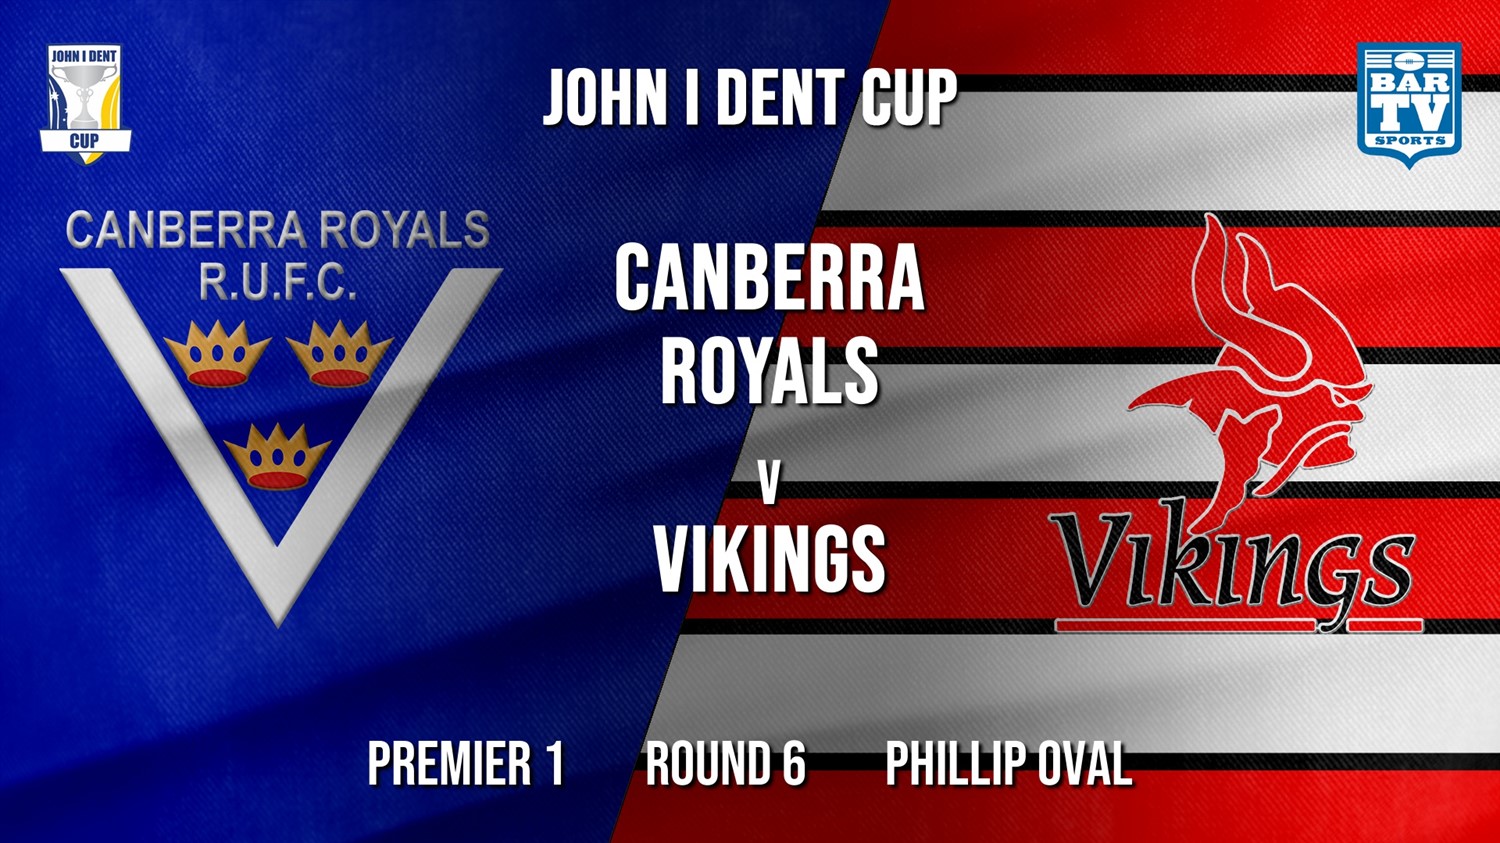 John I Dent Round 6 - Premier 1 - Canberra Royals v Tuggeranong Vikings Minigame Slate Image